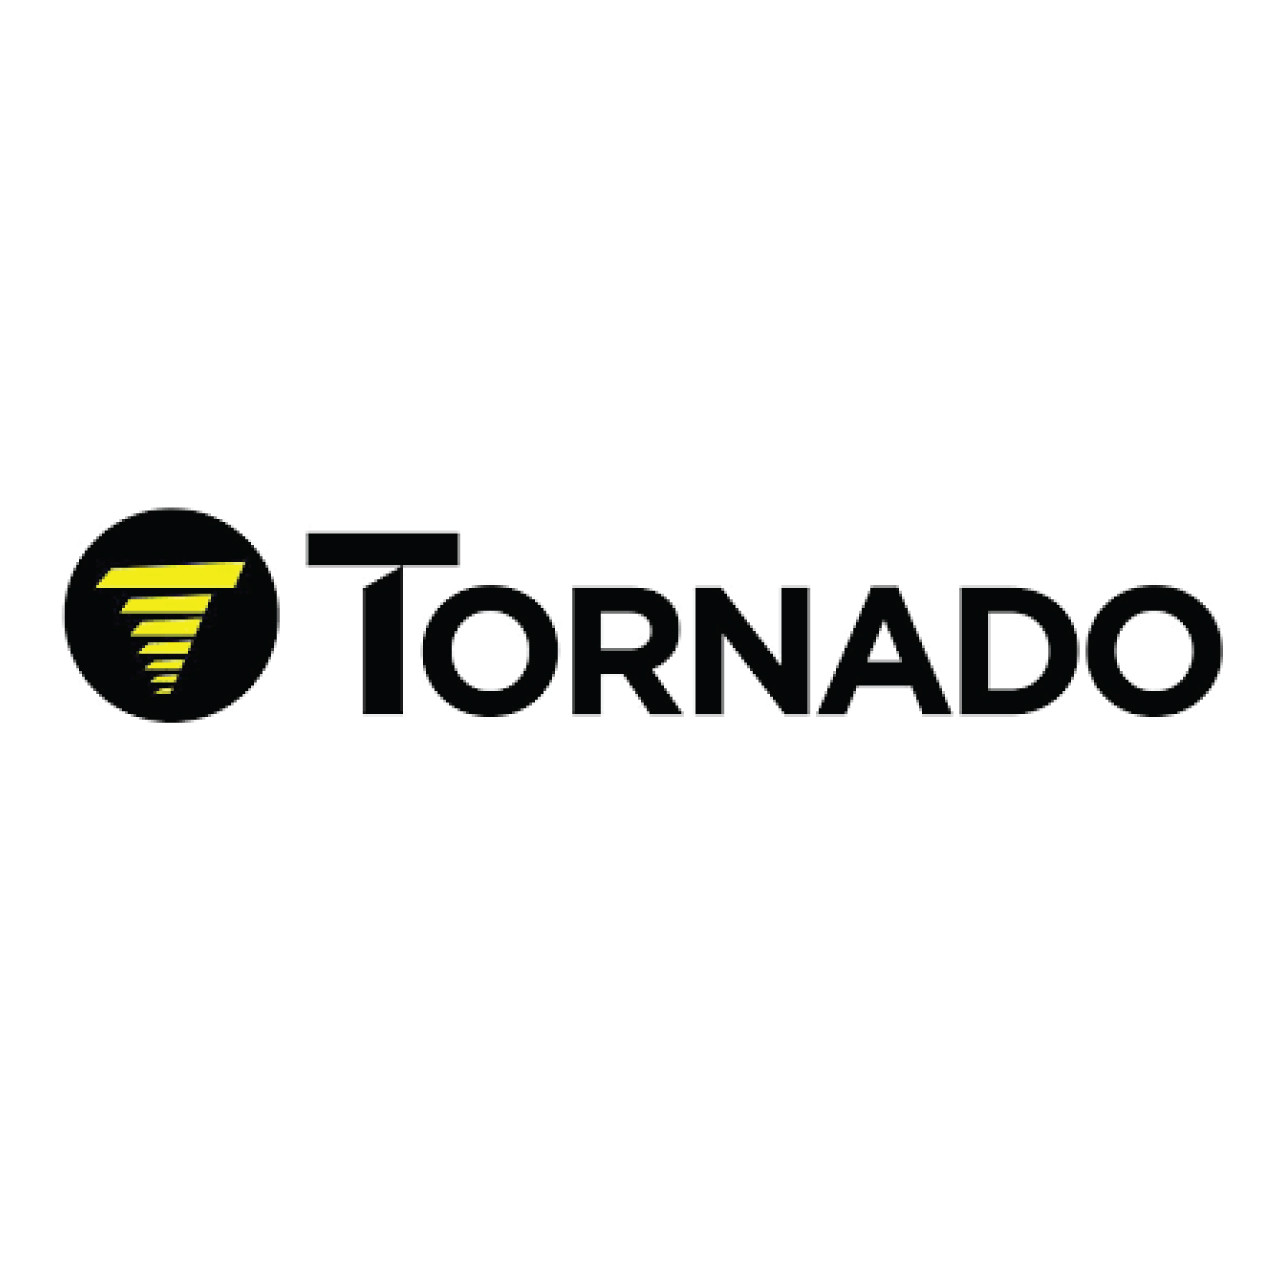 02-4385-0000, Tornado 02-4385-0000, Tornado Gland, Cable Cd22Ma-Blk, Tornado parts